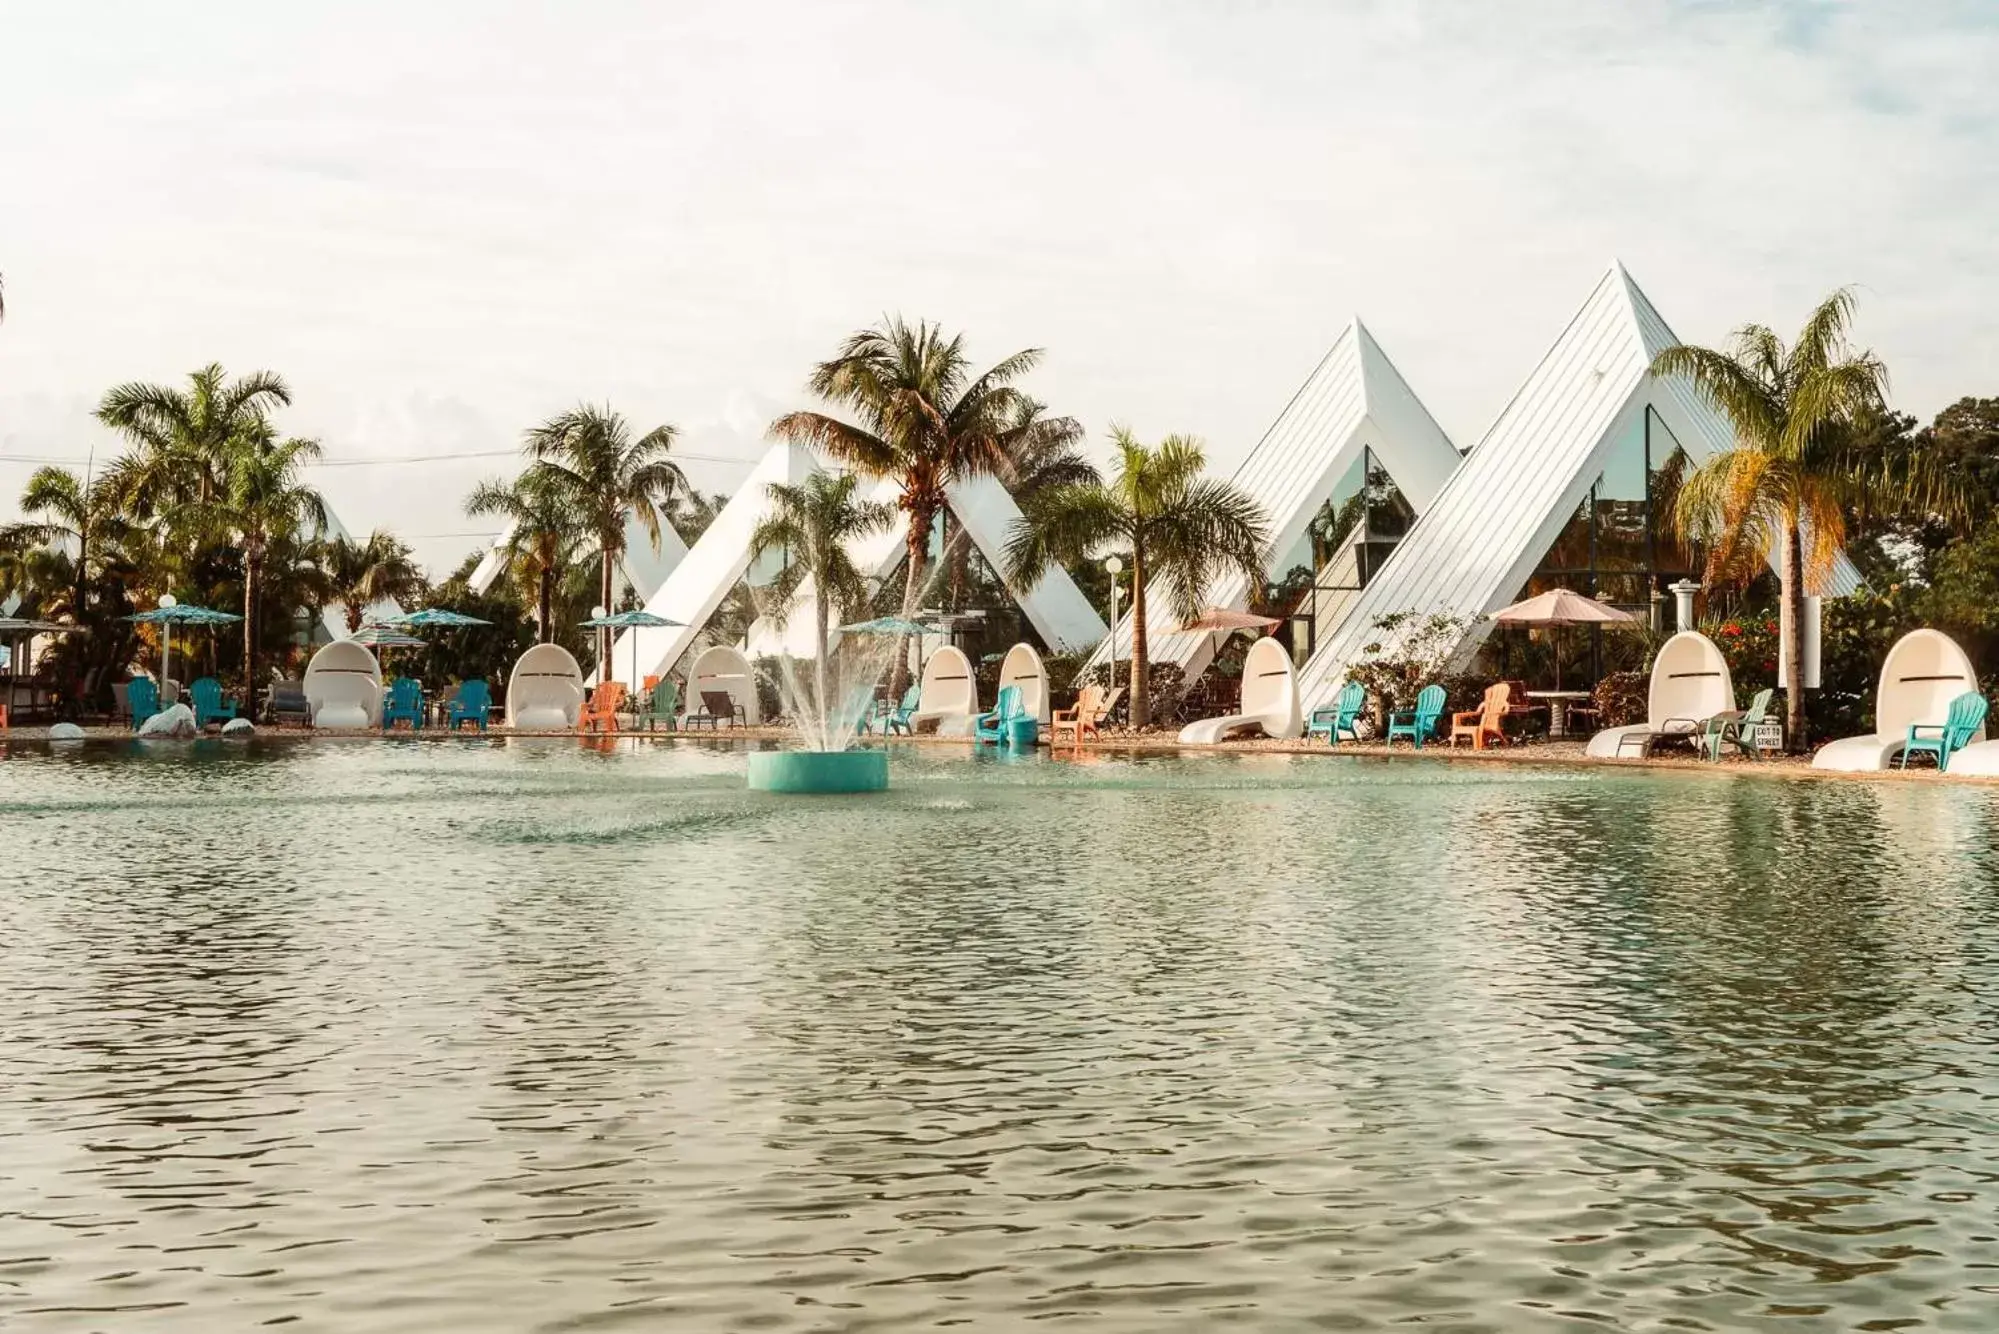 Swimming pool in Pyramids in Florida